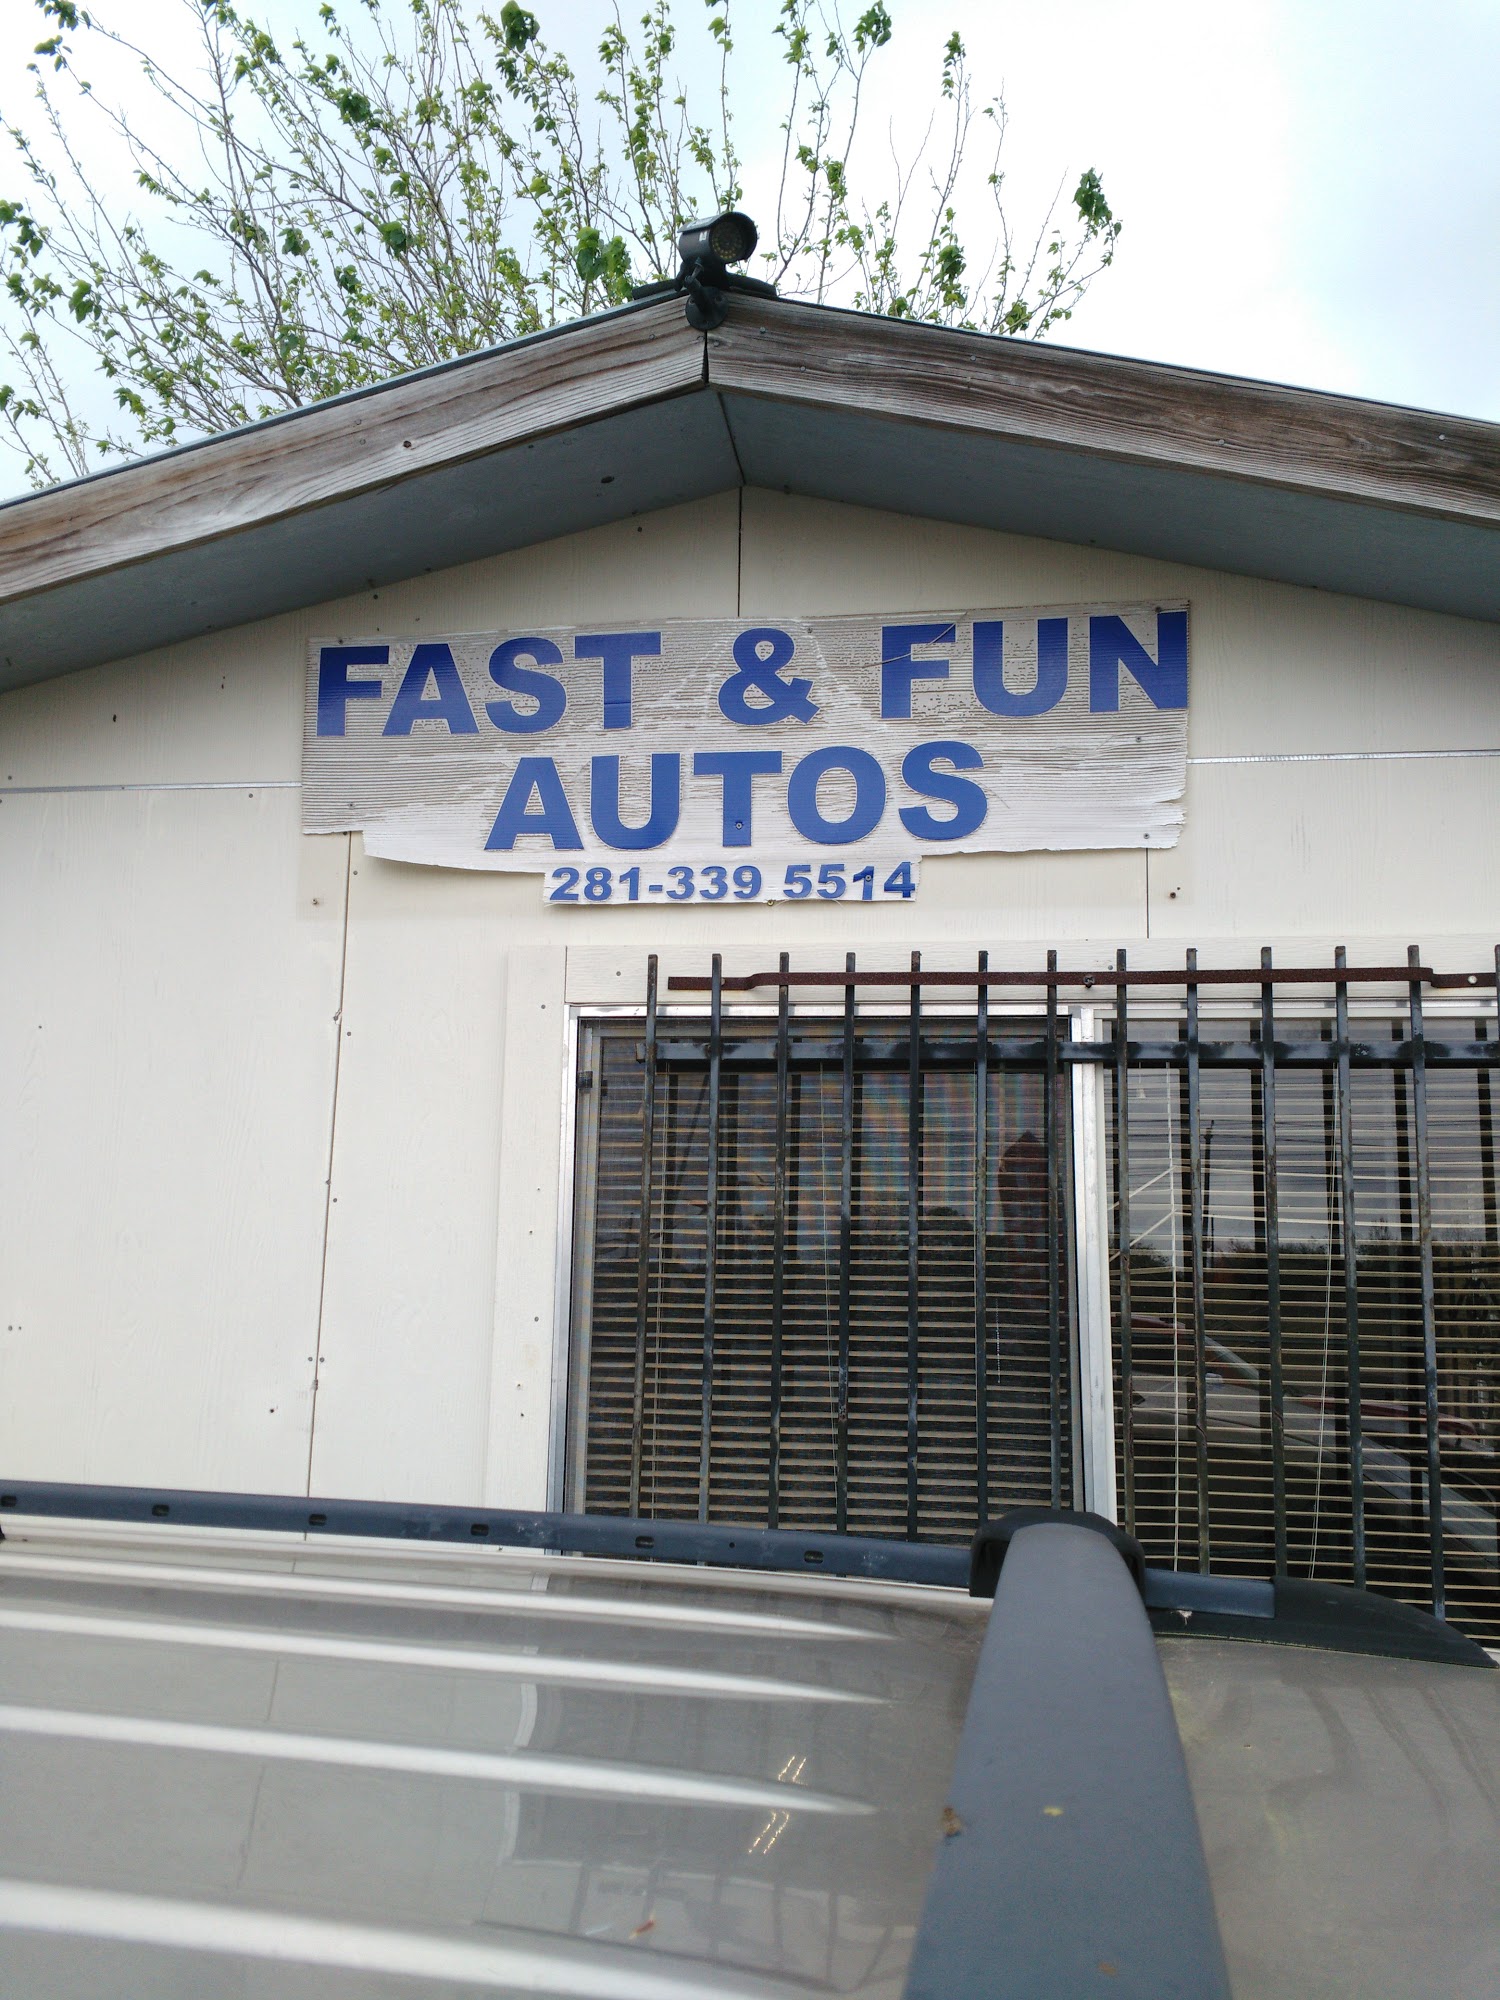 Fast & Fun Autos